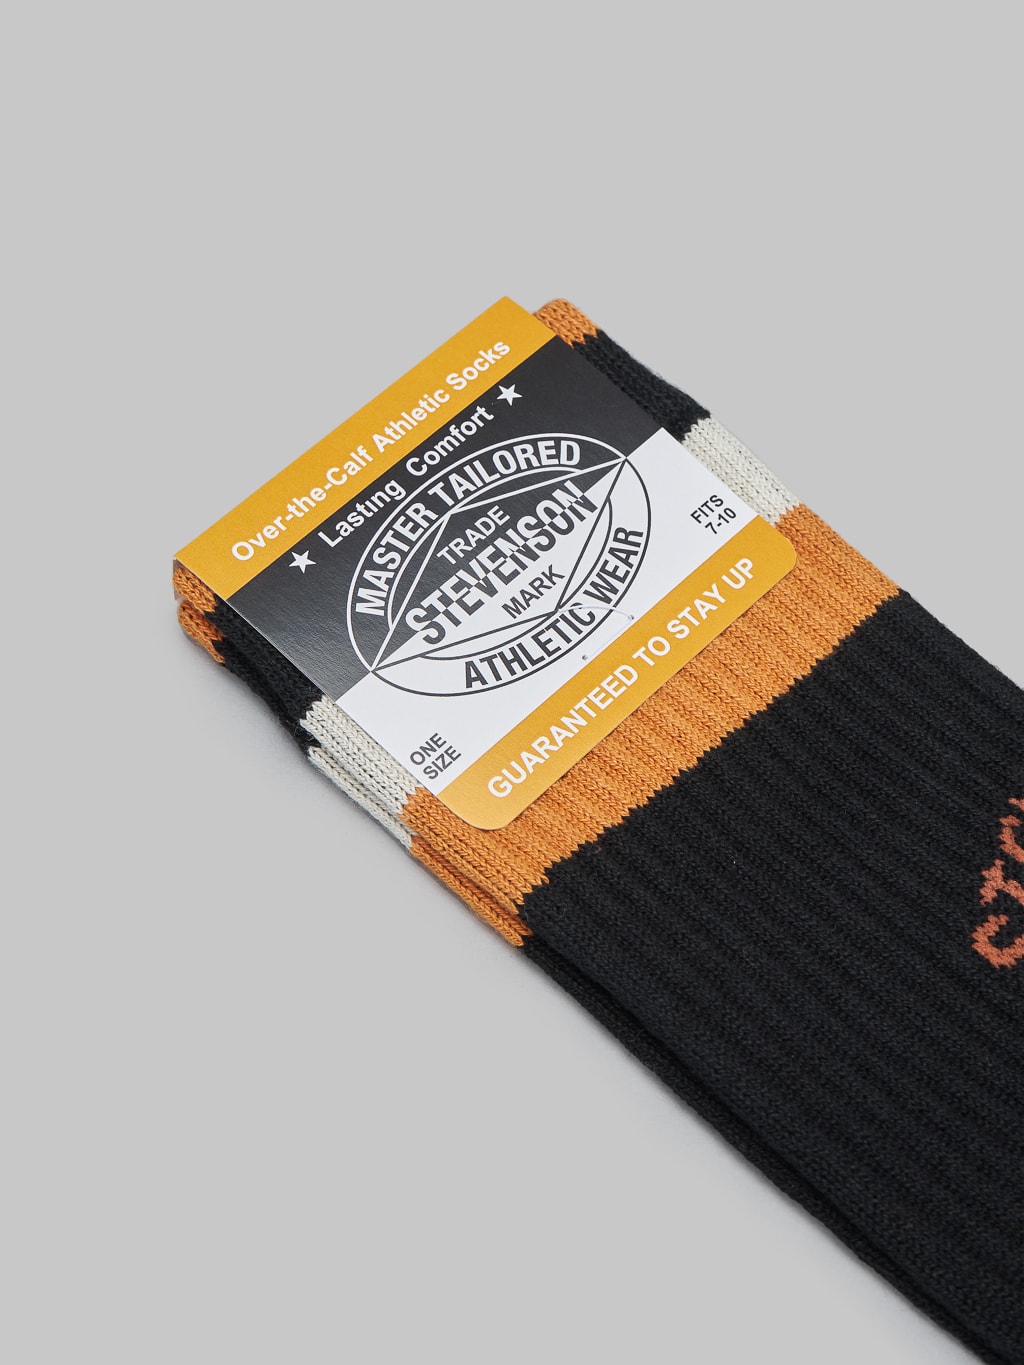 Stevenson Overall Athletic Socks black brand tag